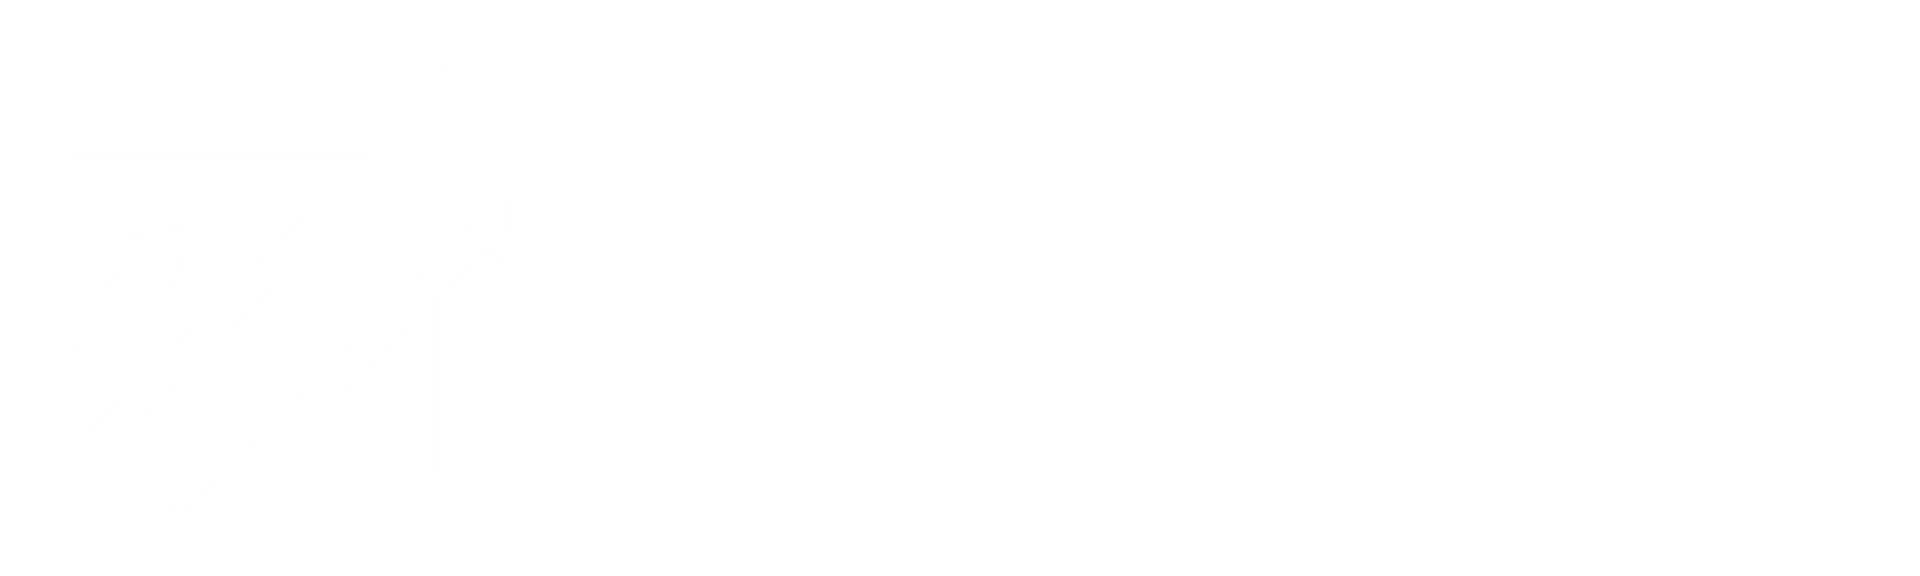 Articulate Digital Business - Digital Transformation Agency